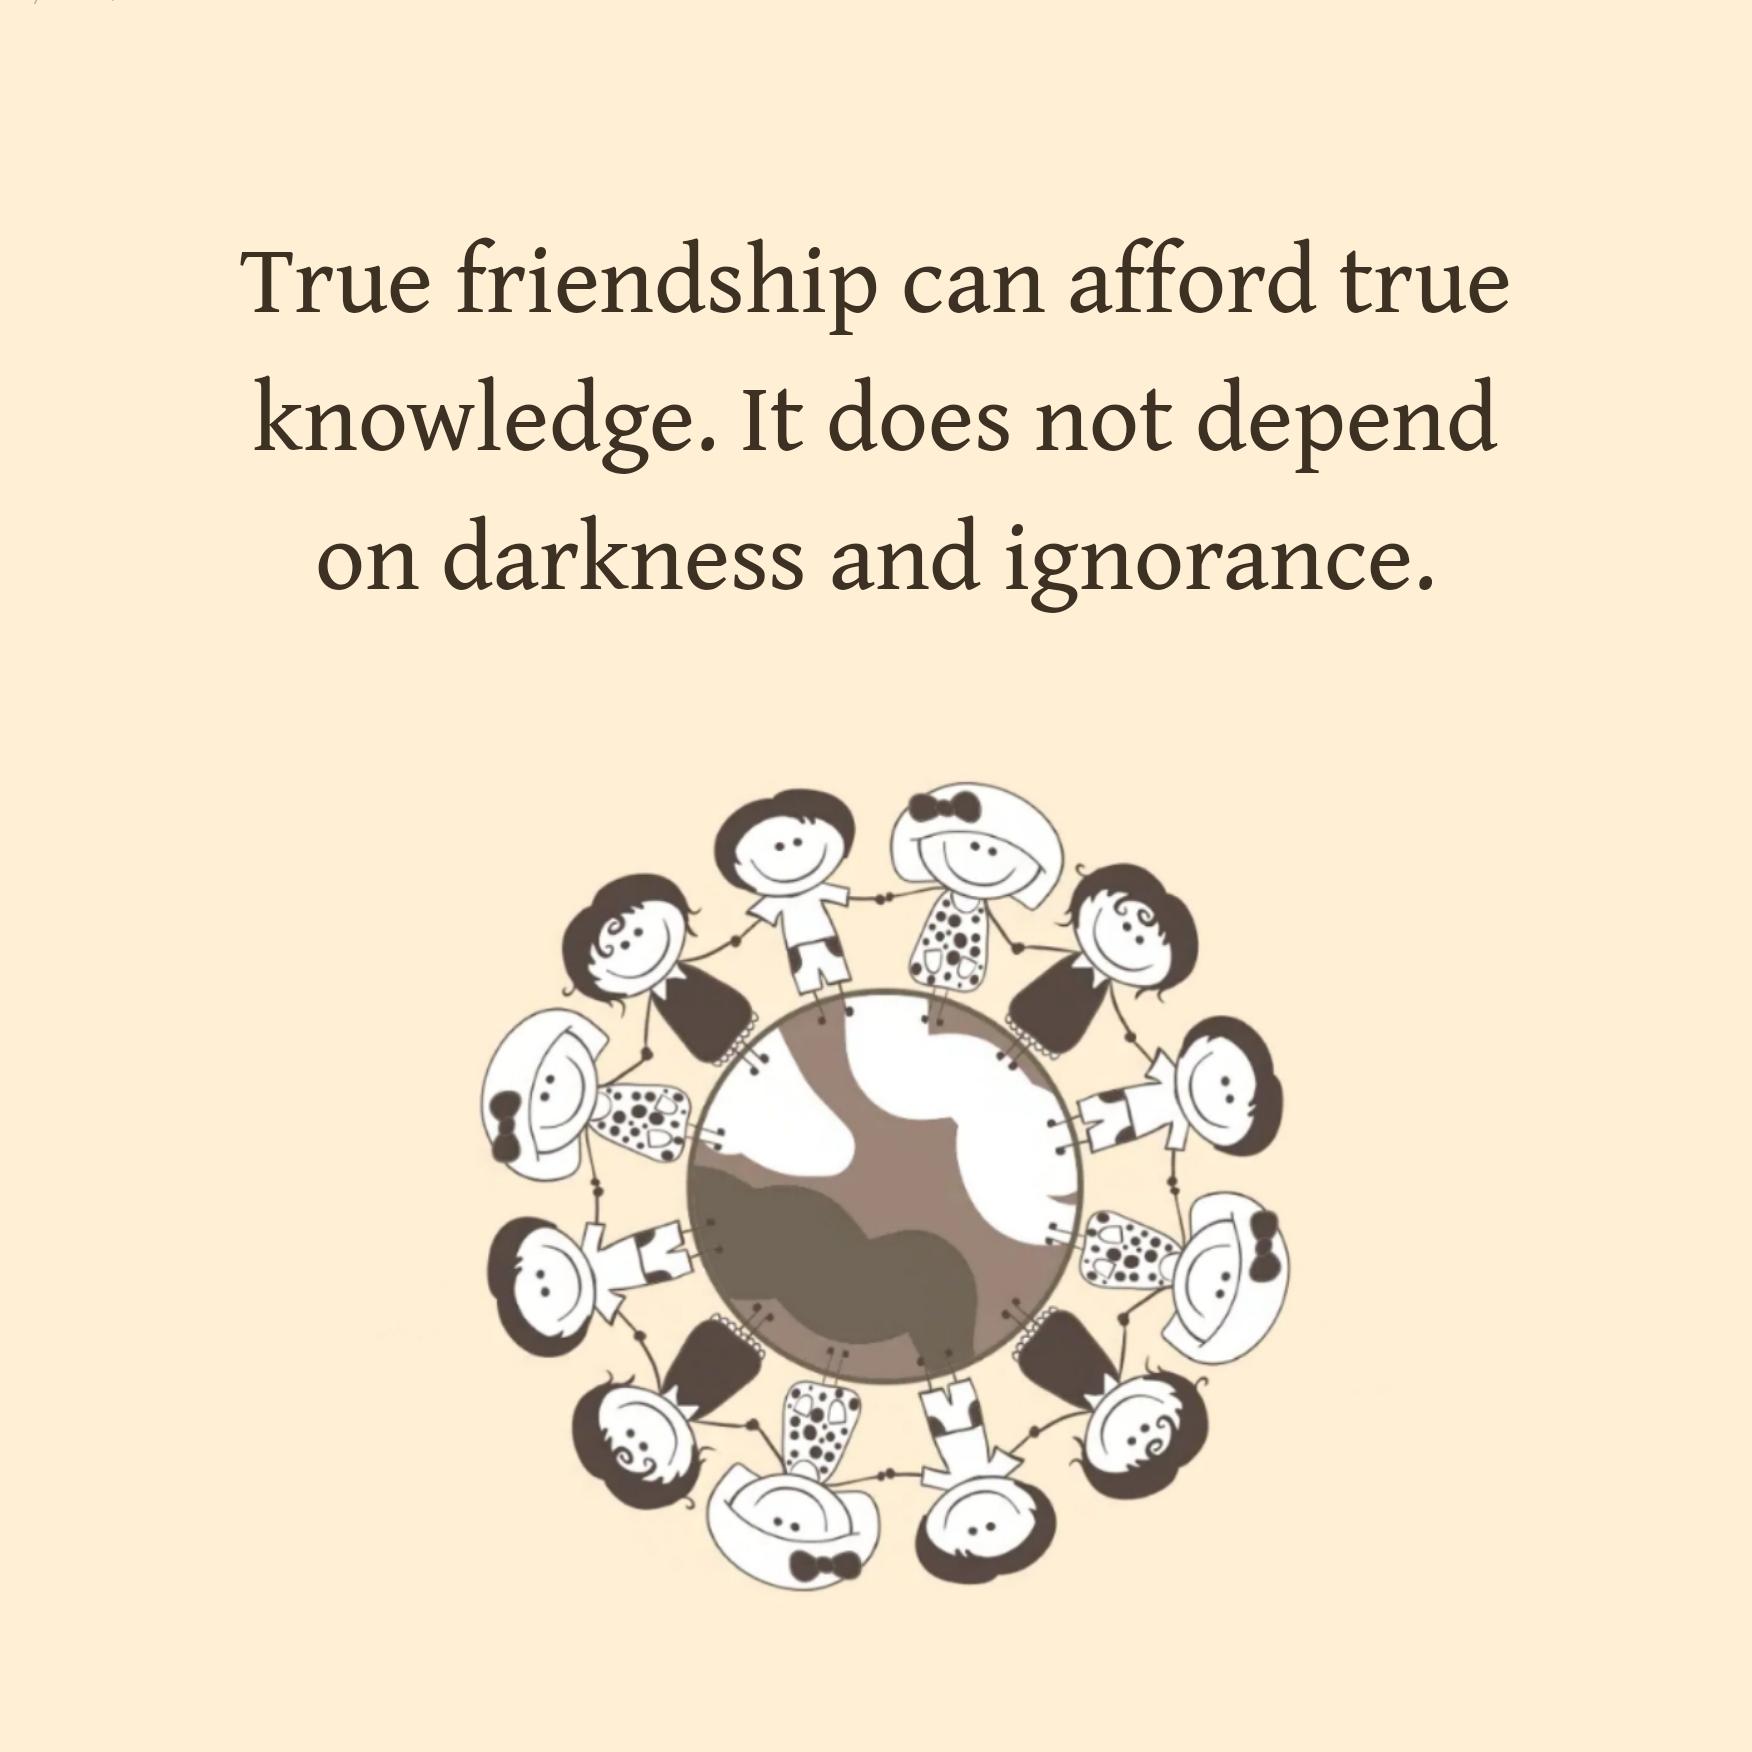 True friendship can afford true knowledge